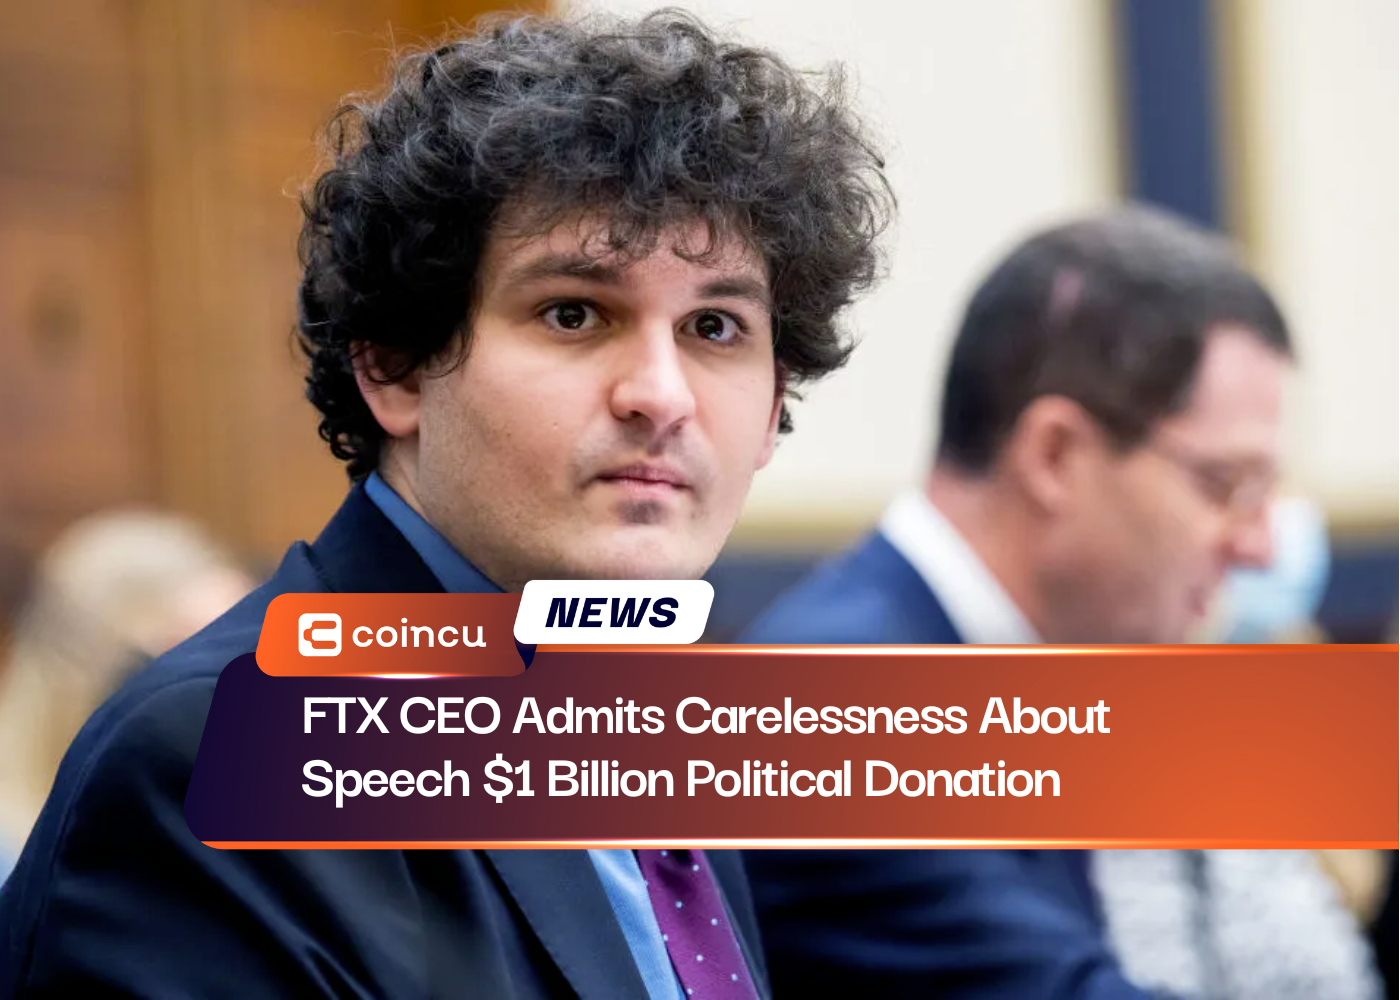 FTX CEO Admits Carelessness About Speech $1 Billion Political Donation